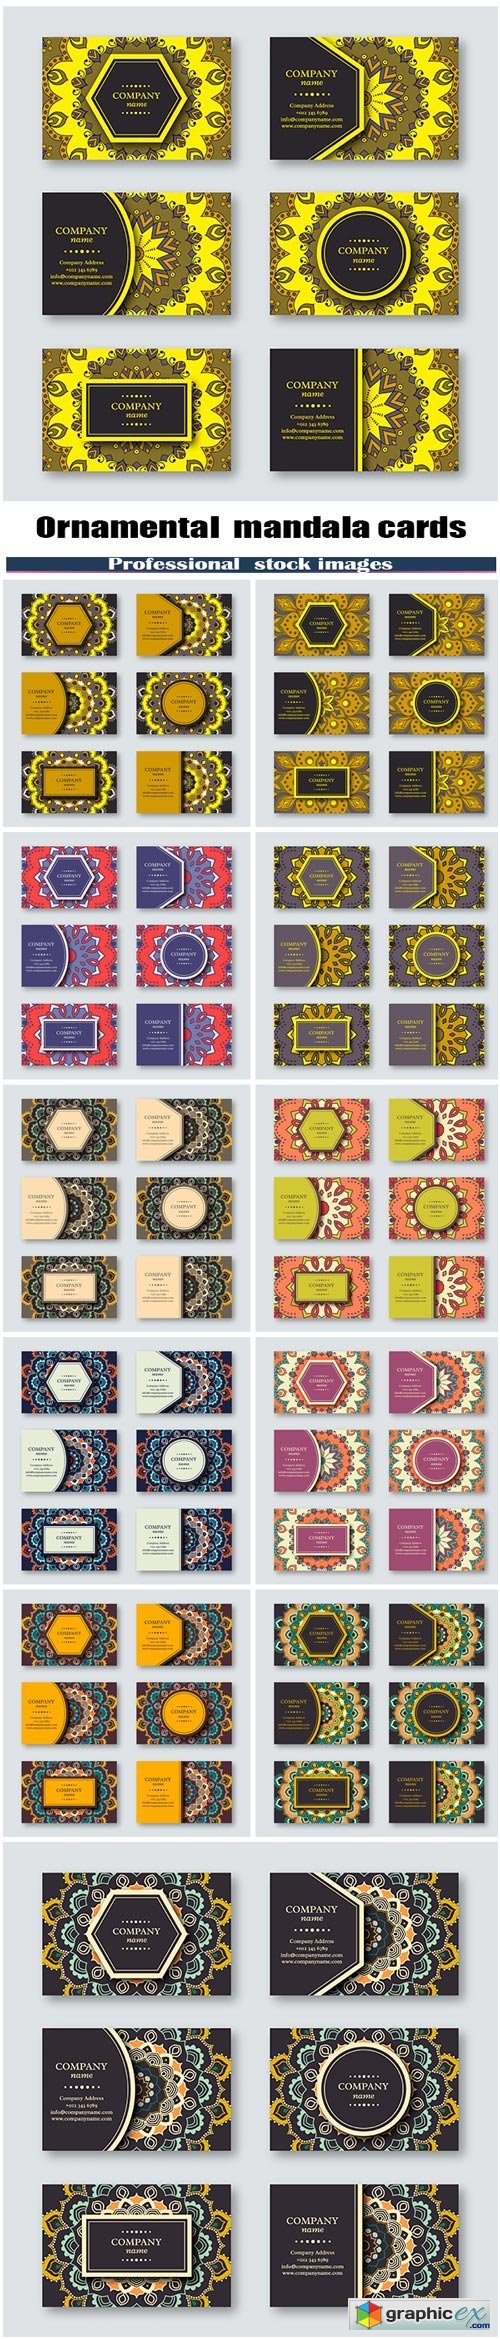 Set of ornamental hand drawn mandala cards